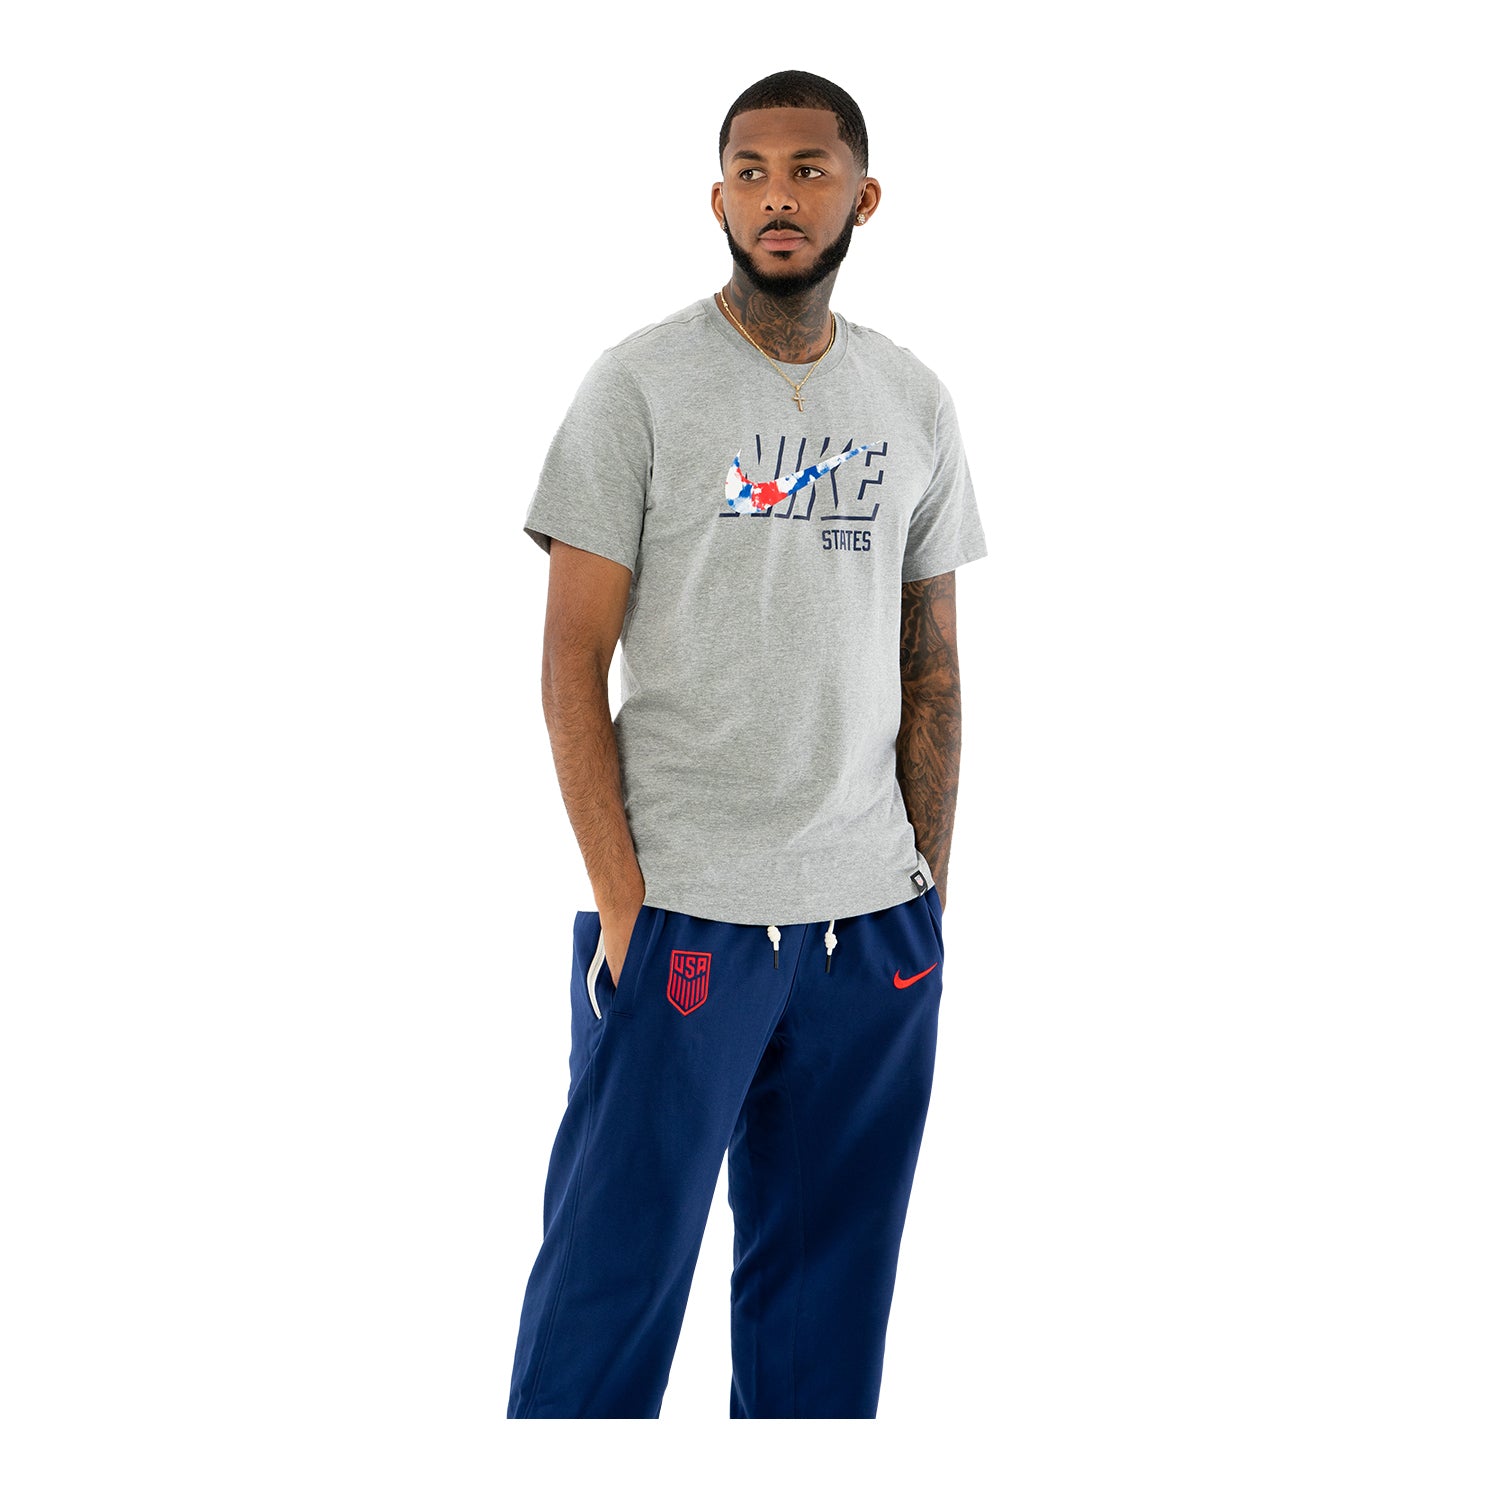 Men's Nike USA Swoosh Grey Tee - Official U.S. Soccer Store